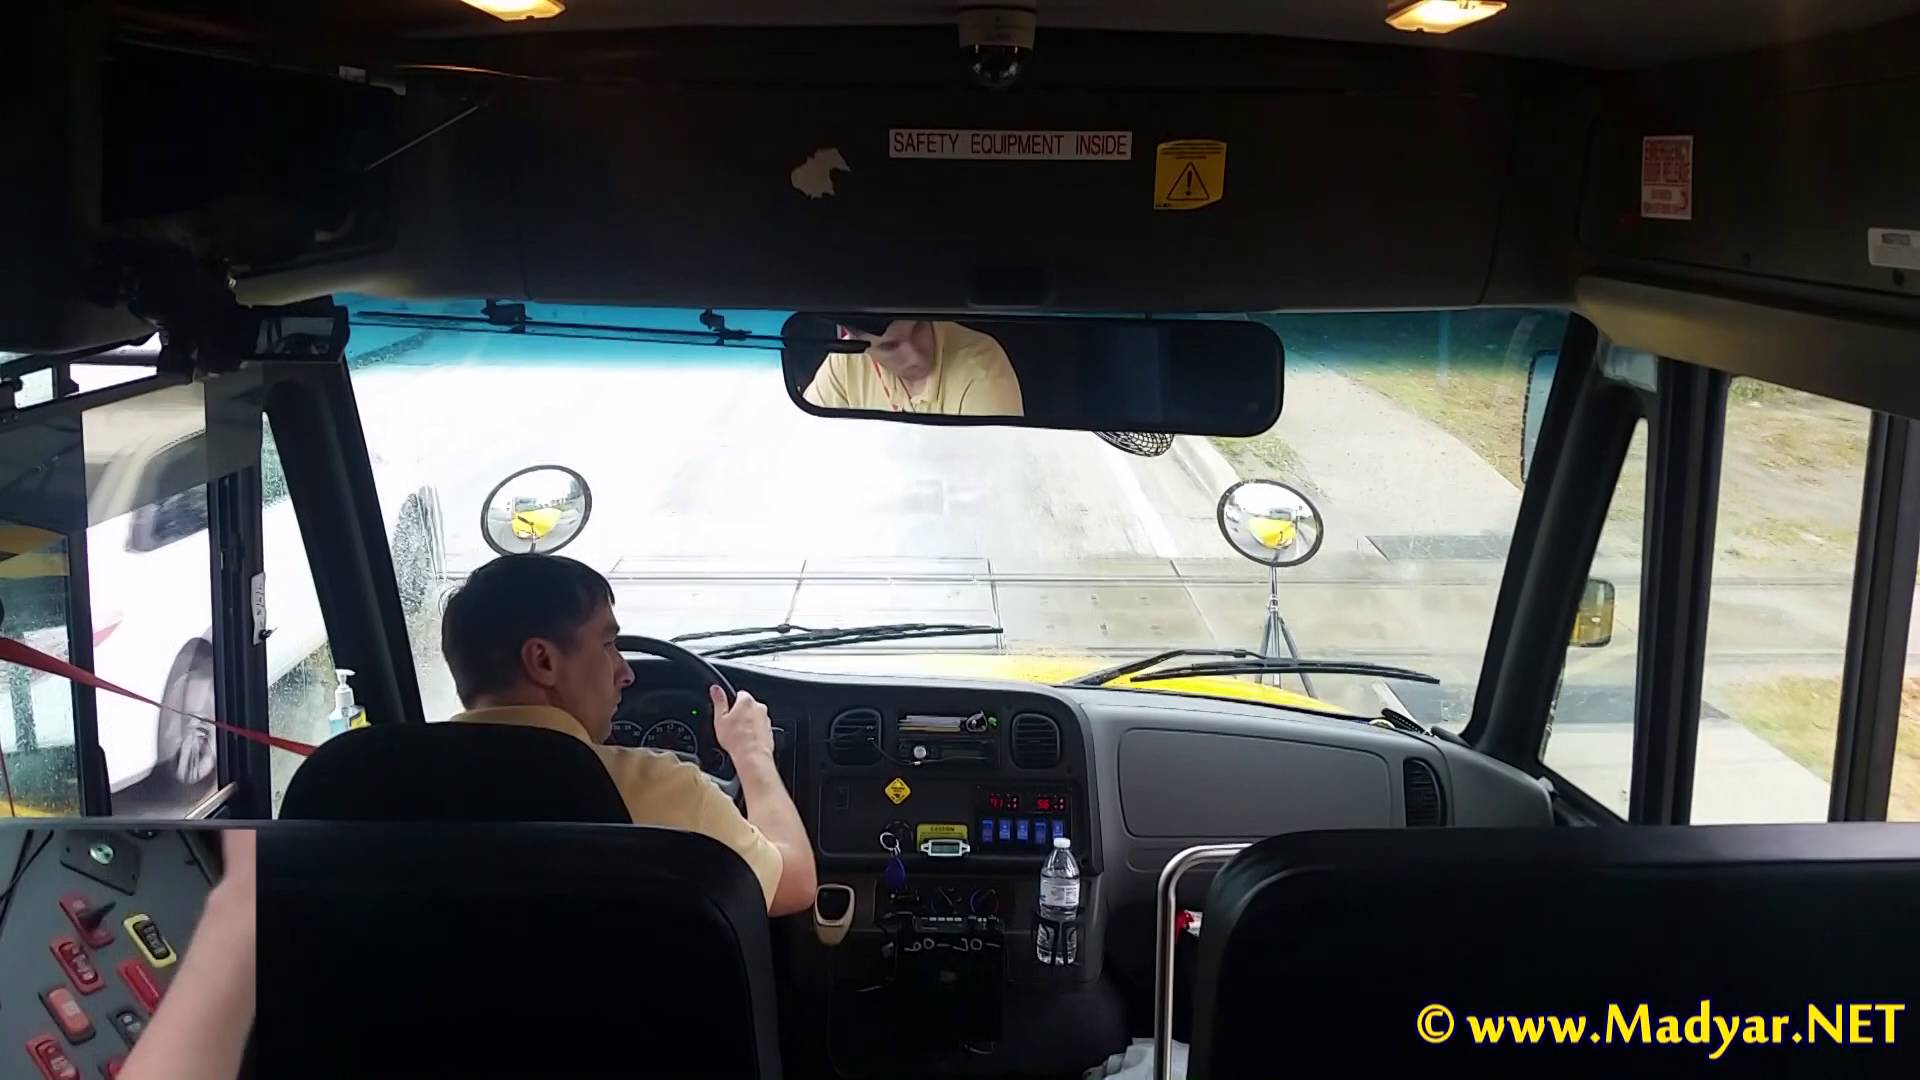 School Bus Passes R/R Crossing [inside view] - YouTube